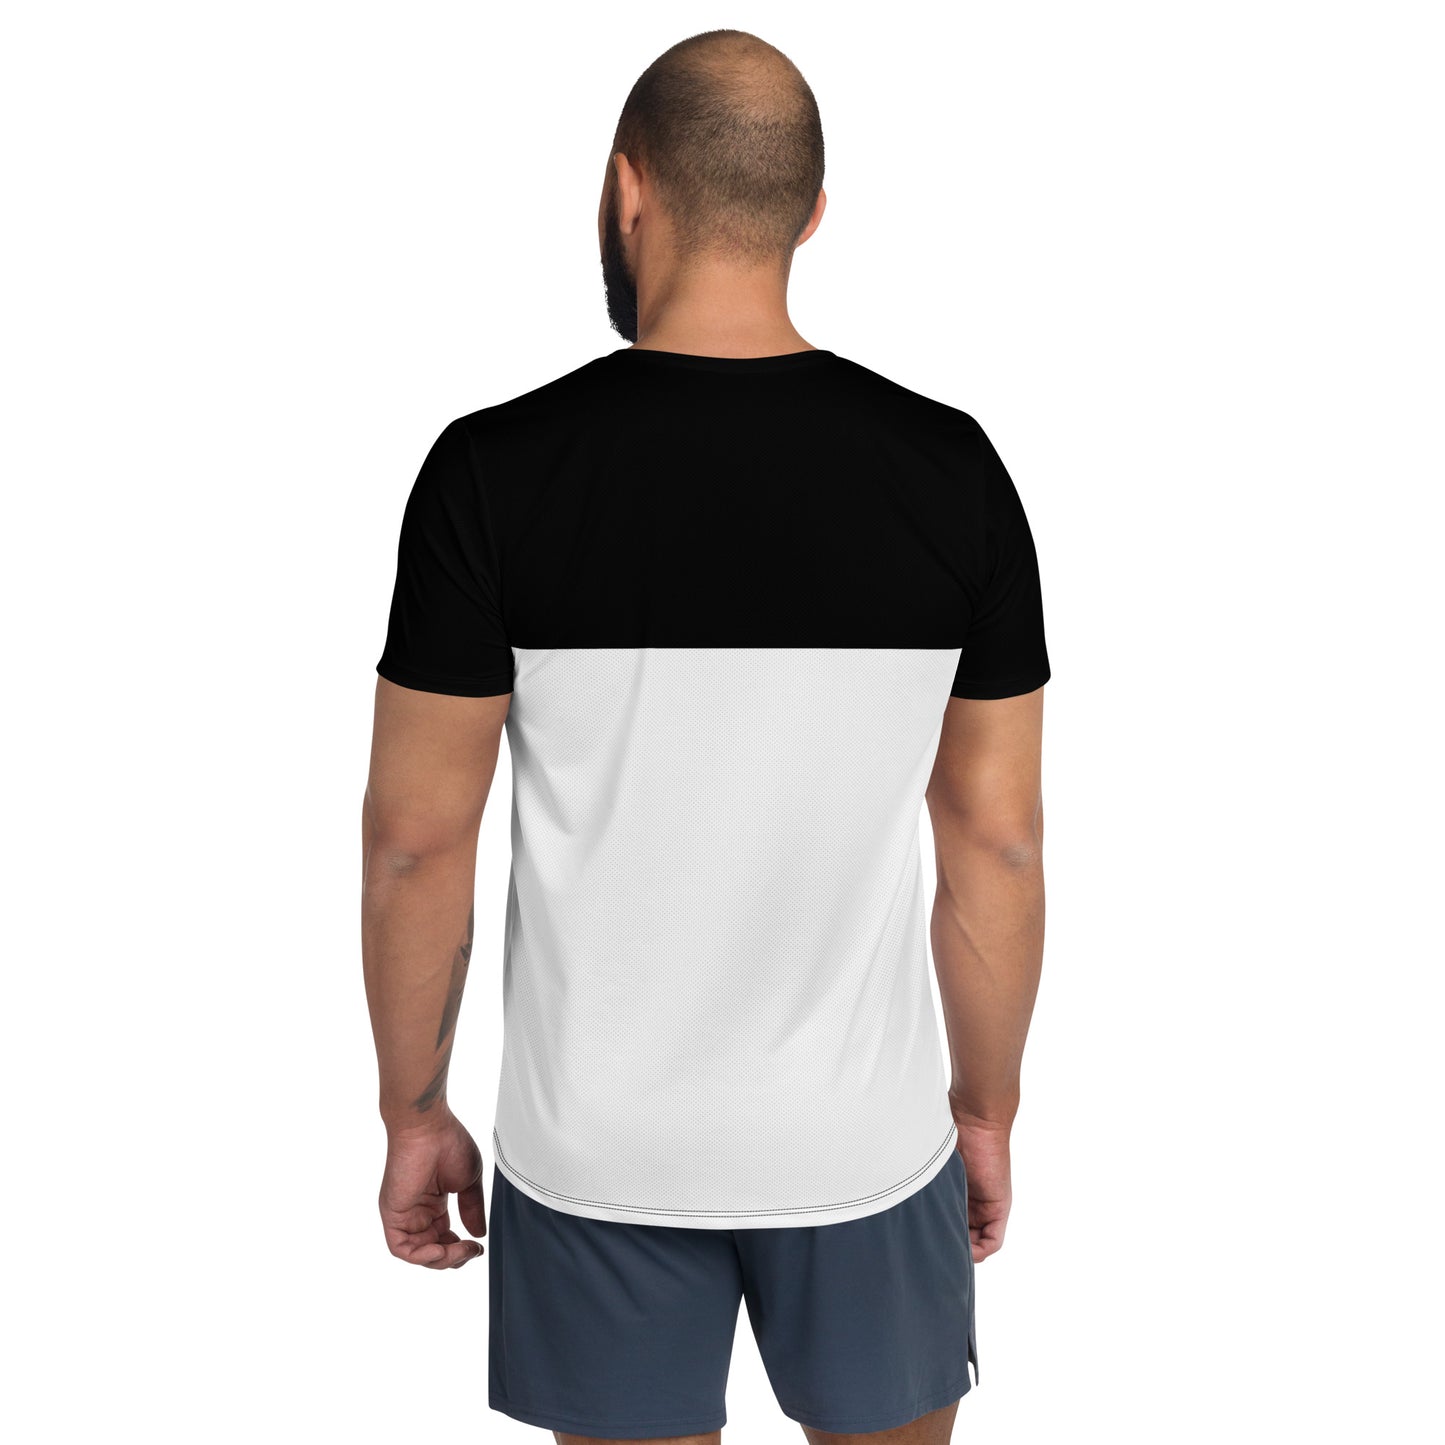 TIME OF VIBES - Men's Athletic T-shirt PART (Black/White) - €45.00